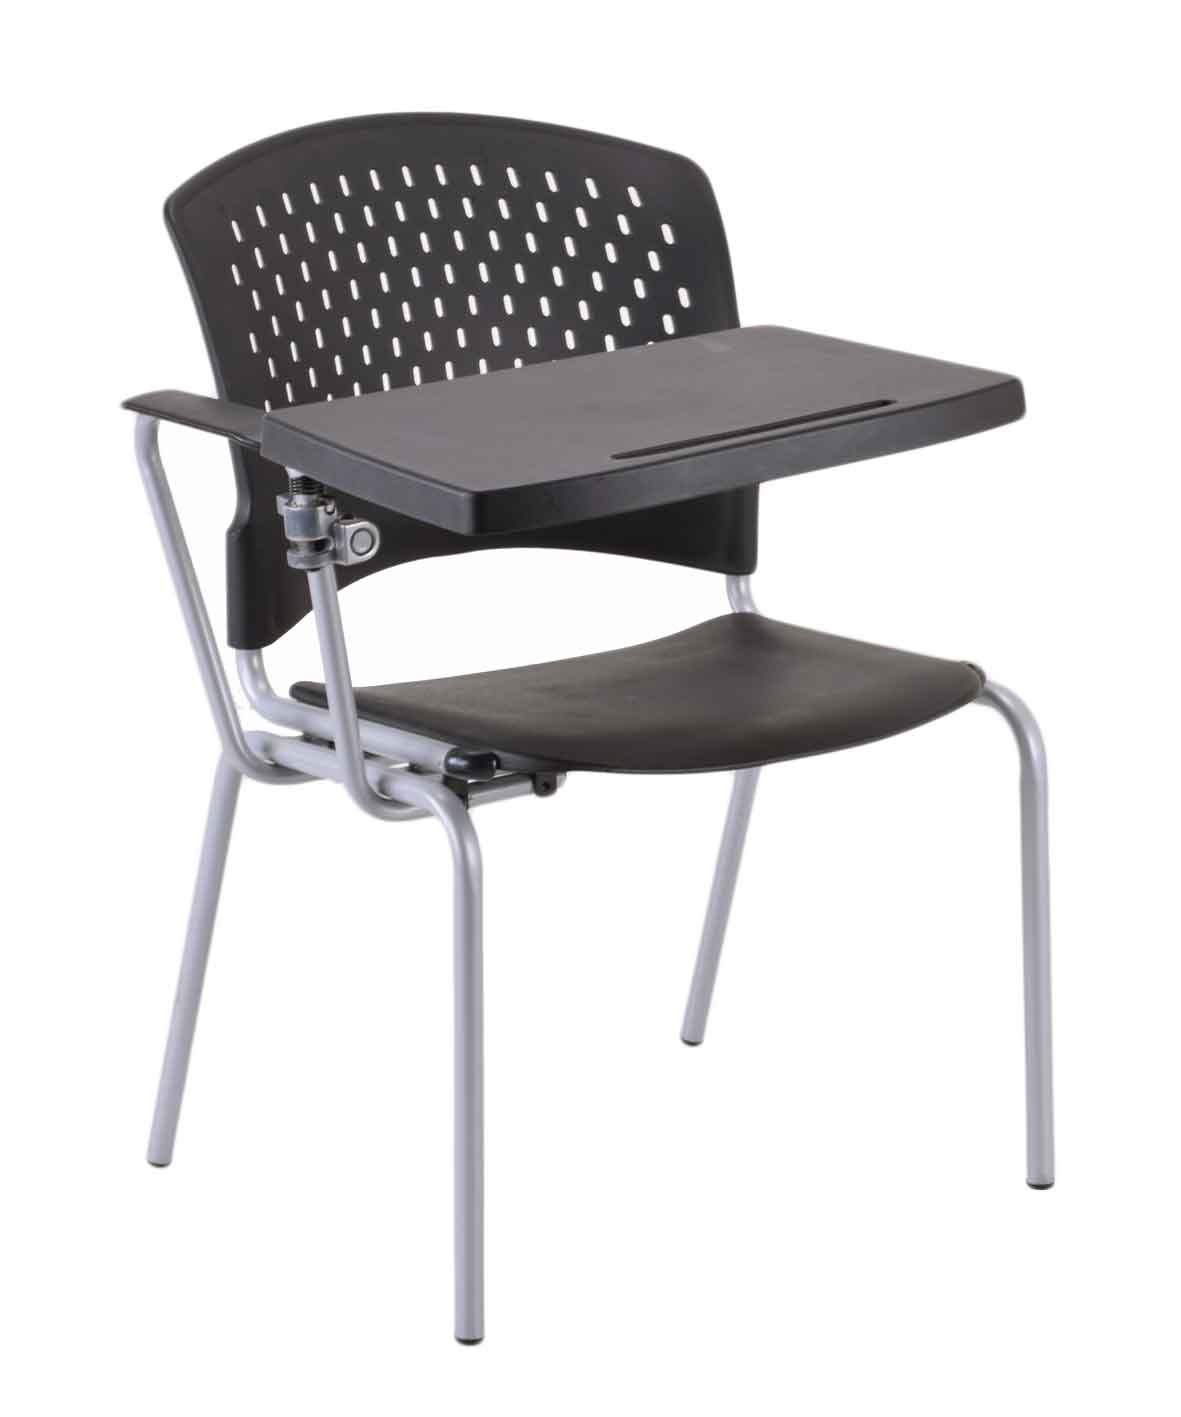 Eductional chair / desk